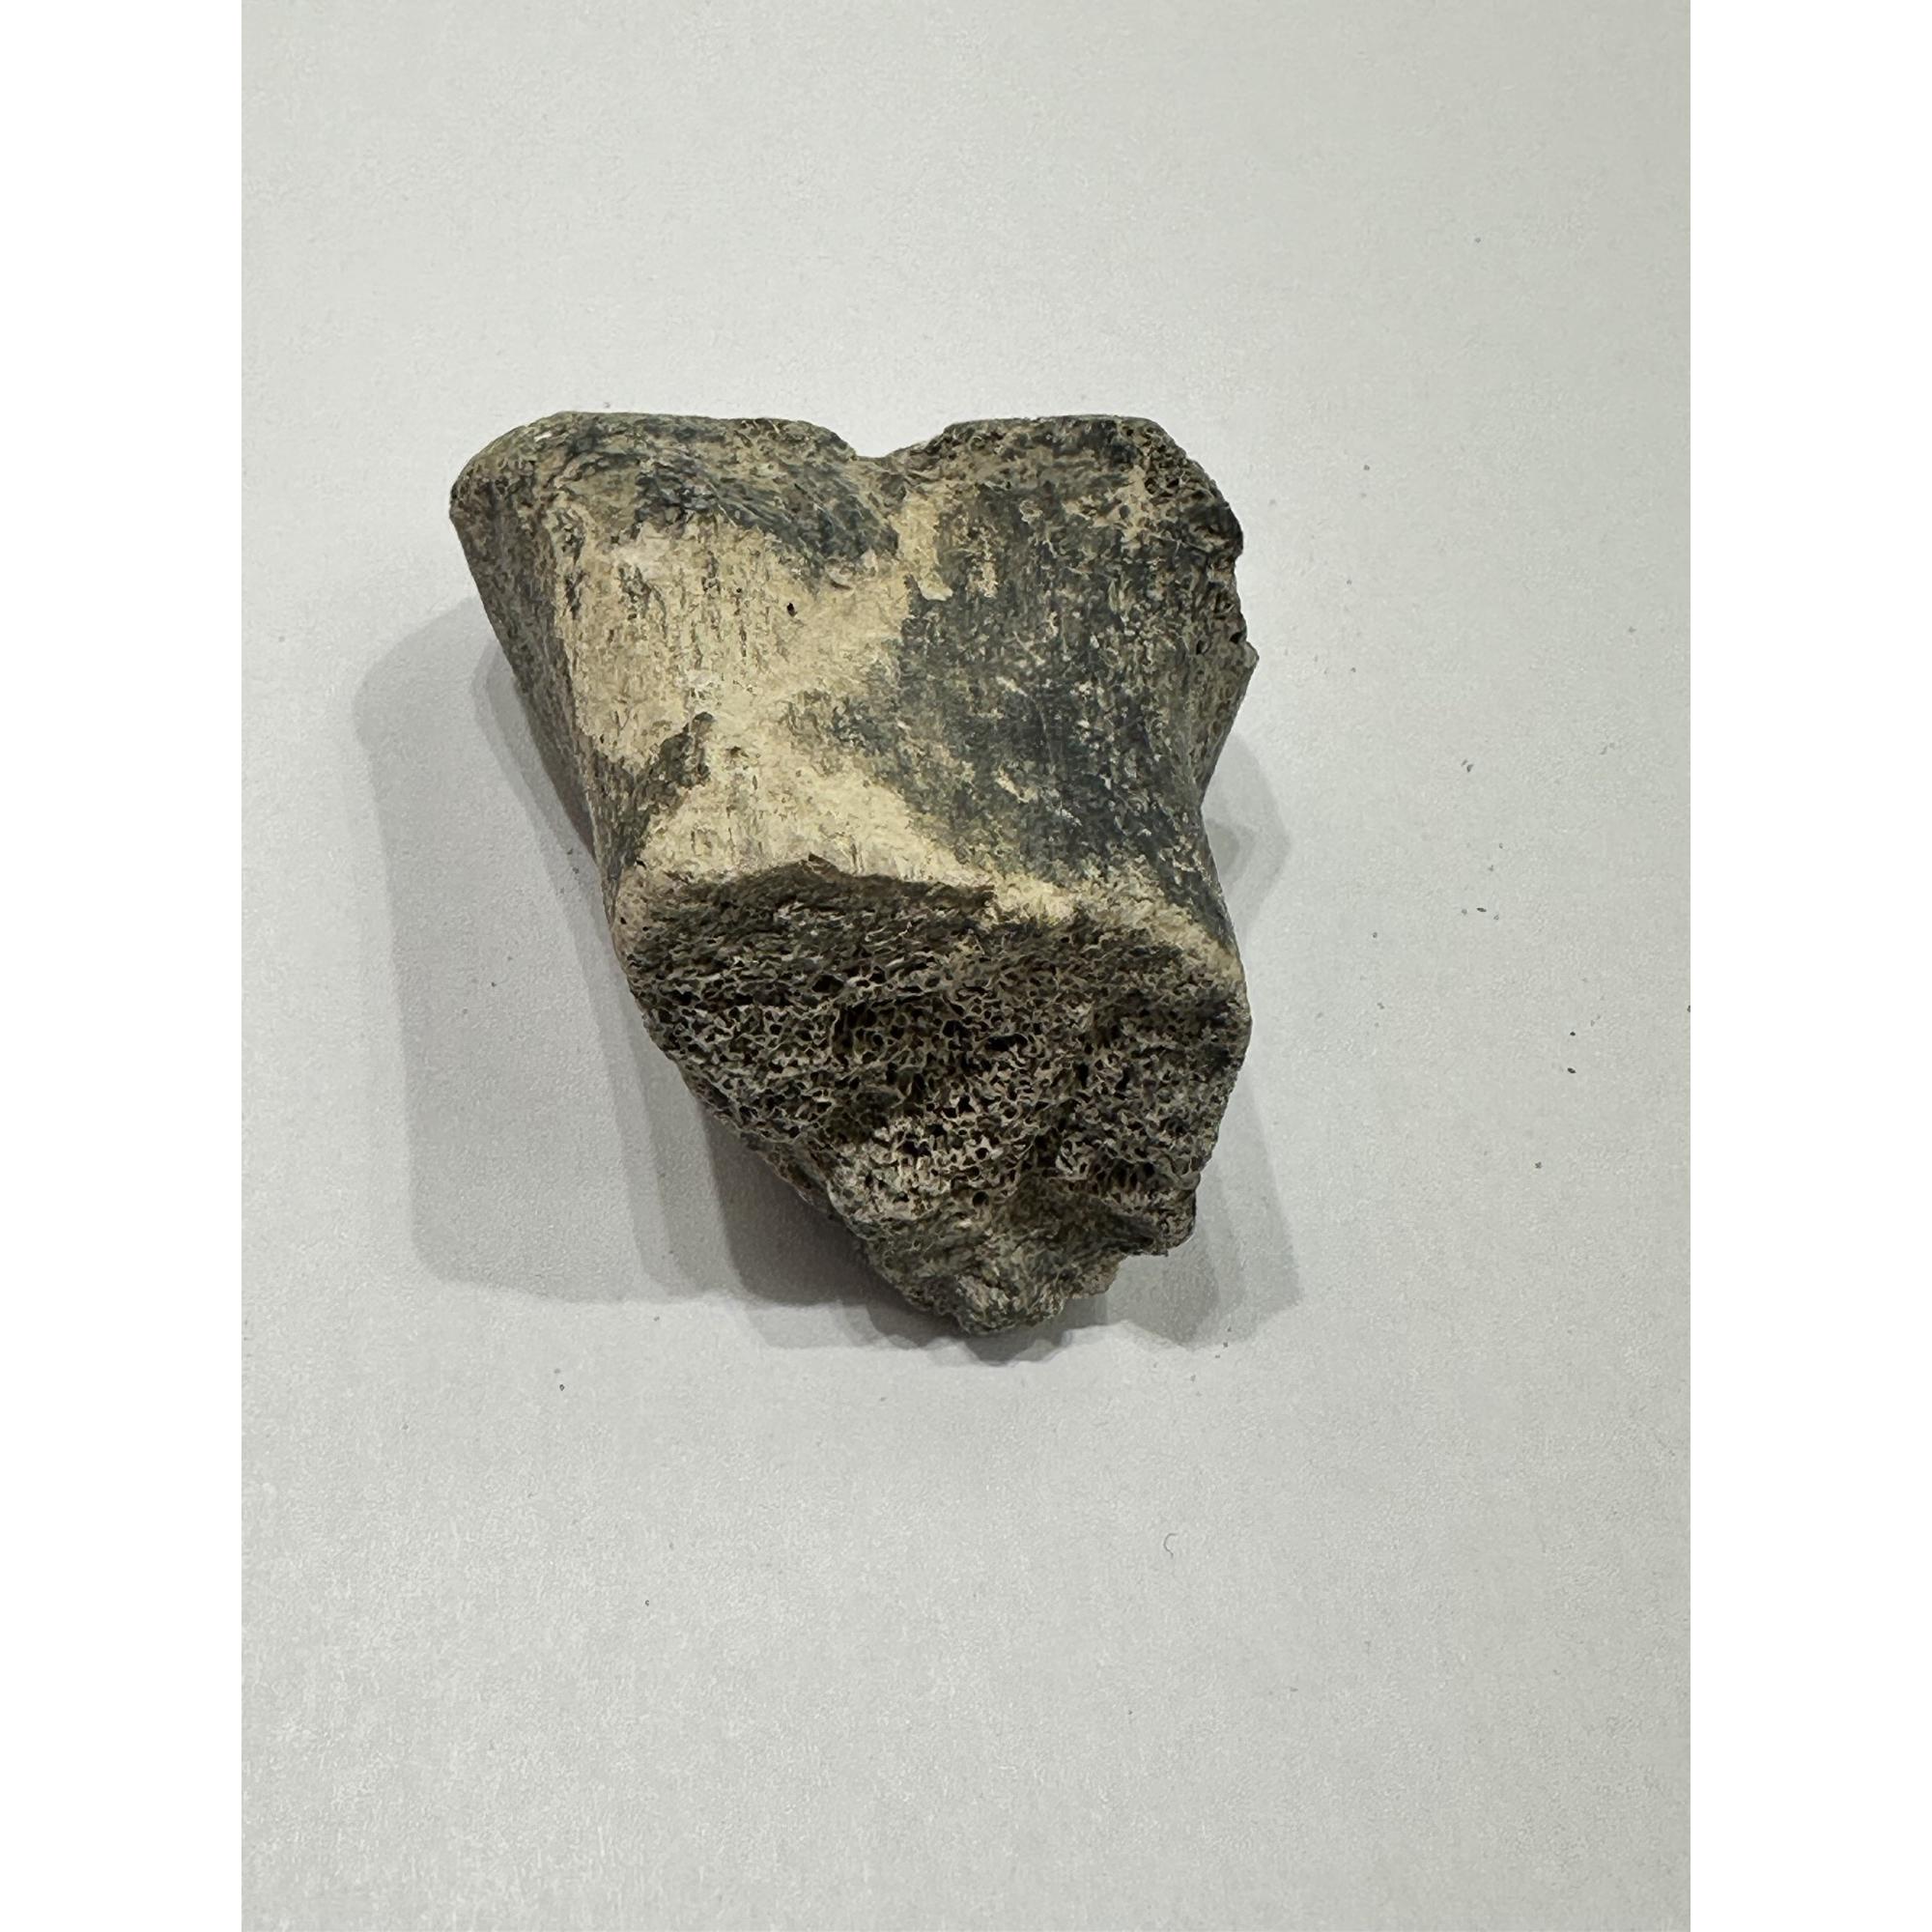 Alligator fossil Tibia End bone, Florida Prehistoric Online